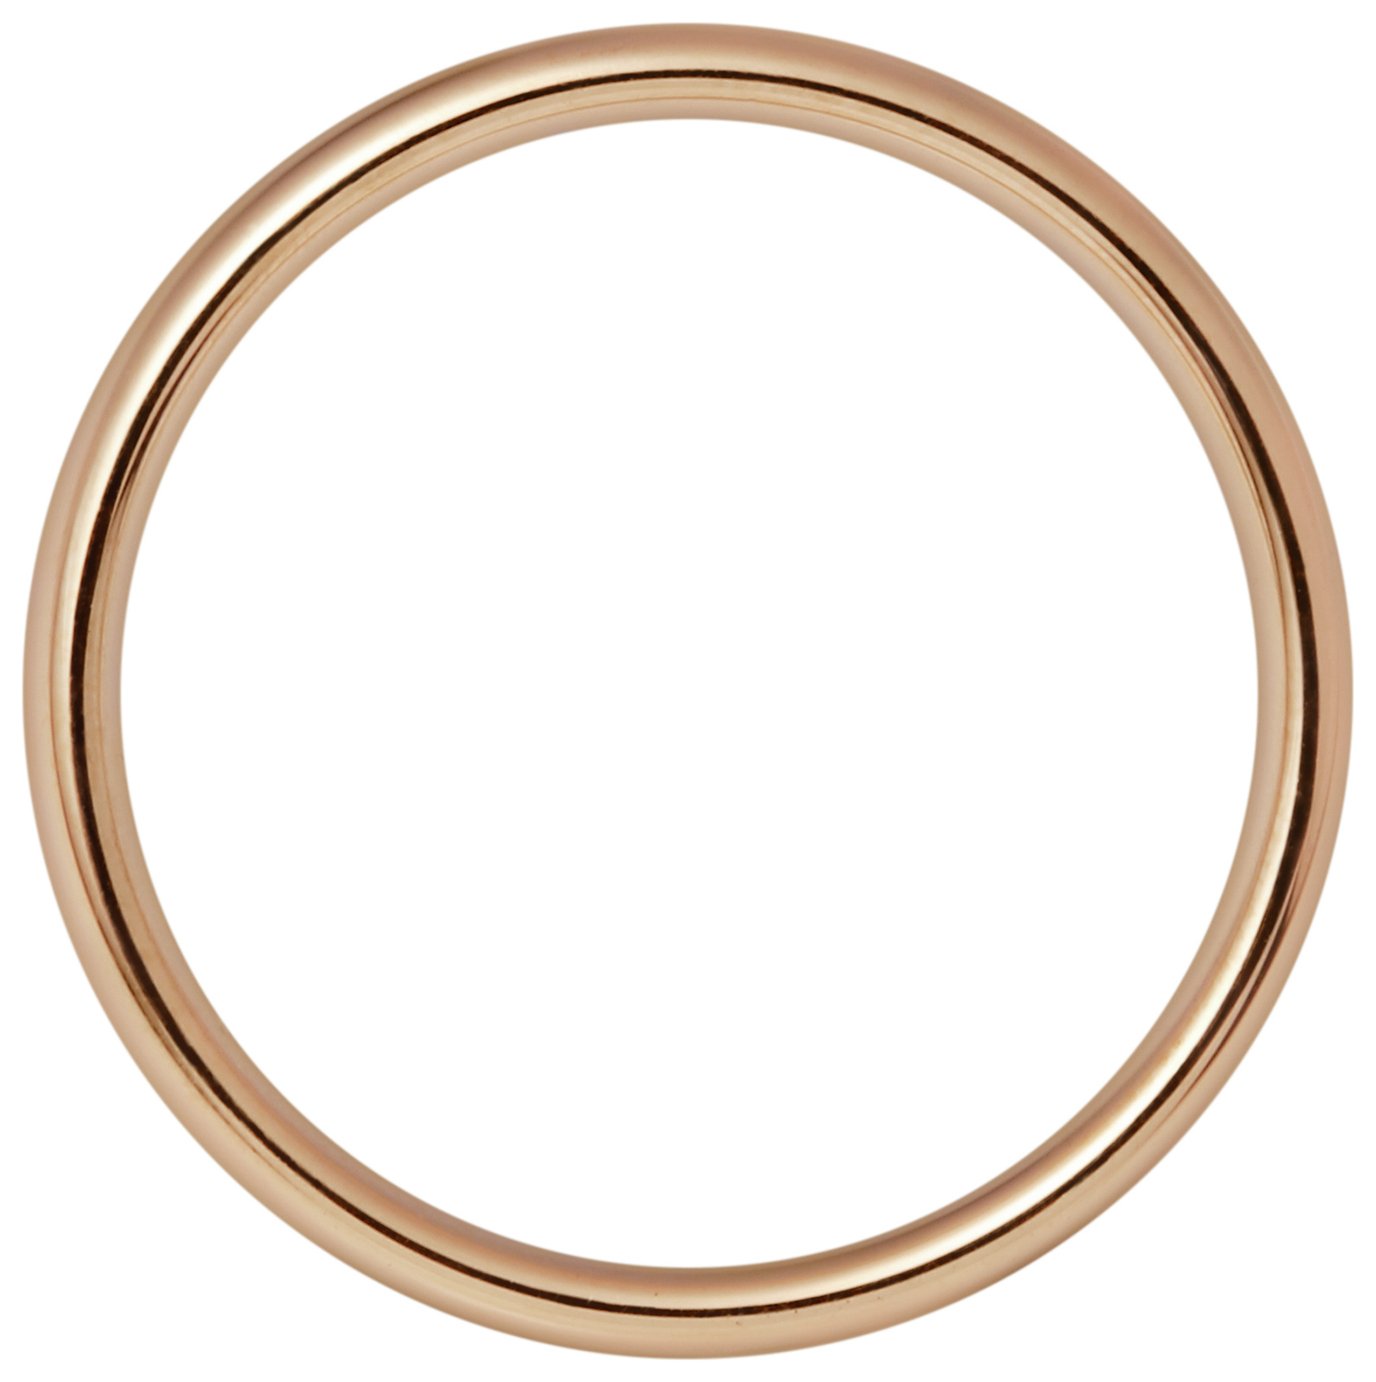 Inara Rose Gold Plated Ceramic Stacking Ring Review